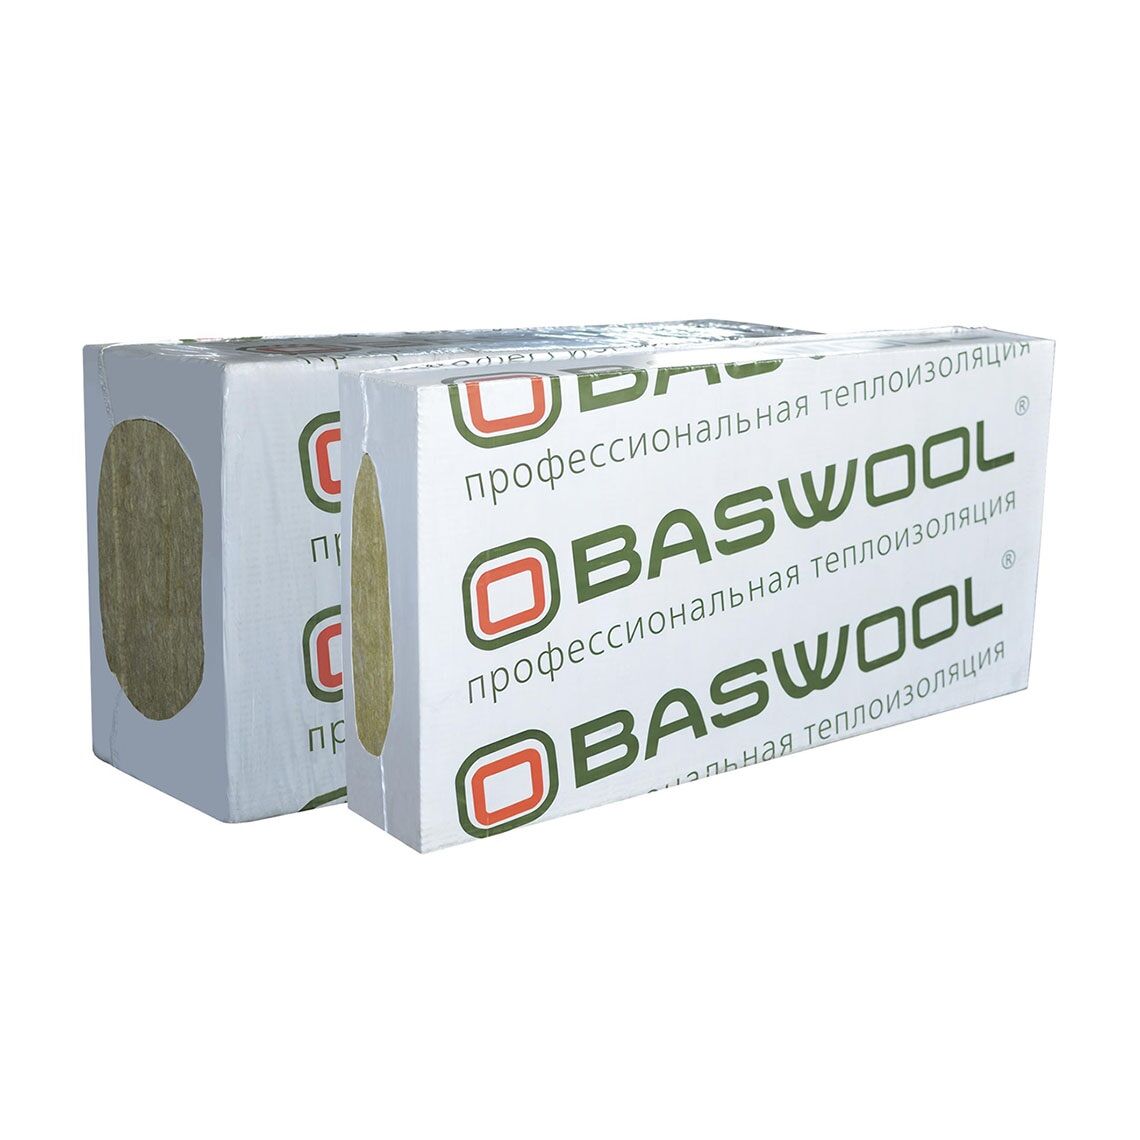 Утеплитель Baswool Вент Фасад 70 50x600x1200 мм уп 6 шт 4,32 м2 0,216м3